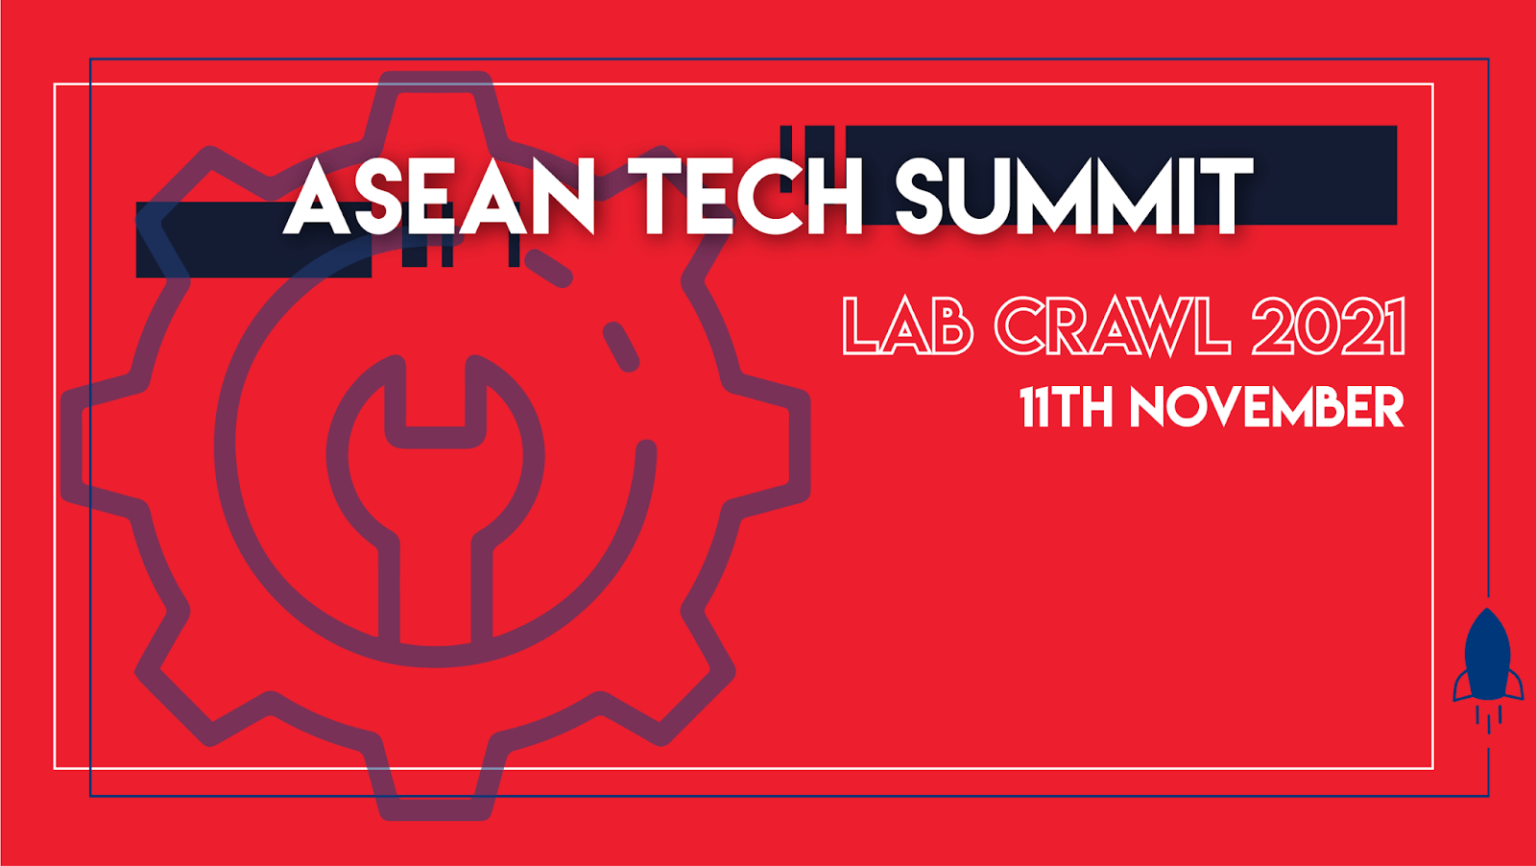 Asean Tech Summit 2021 - The Finlab'S Lab Crawl 2021